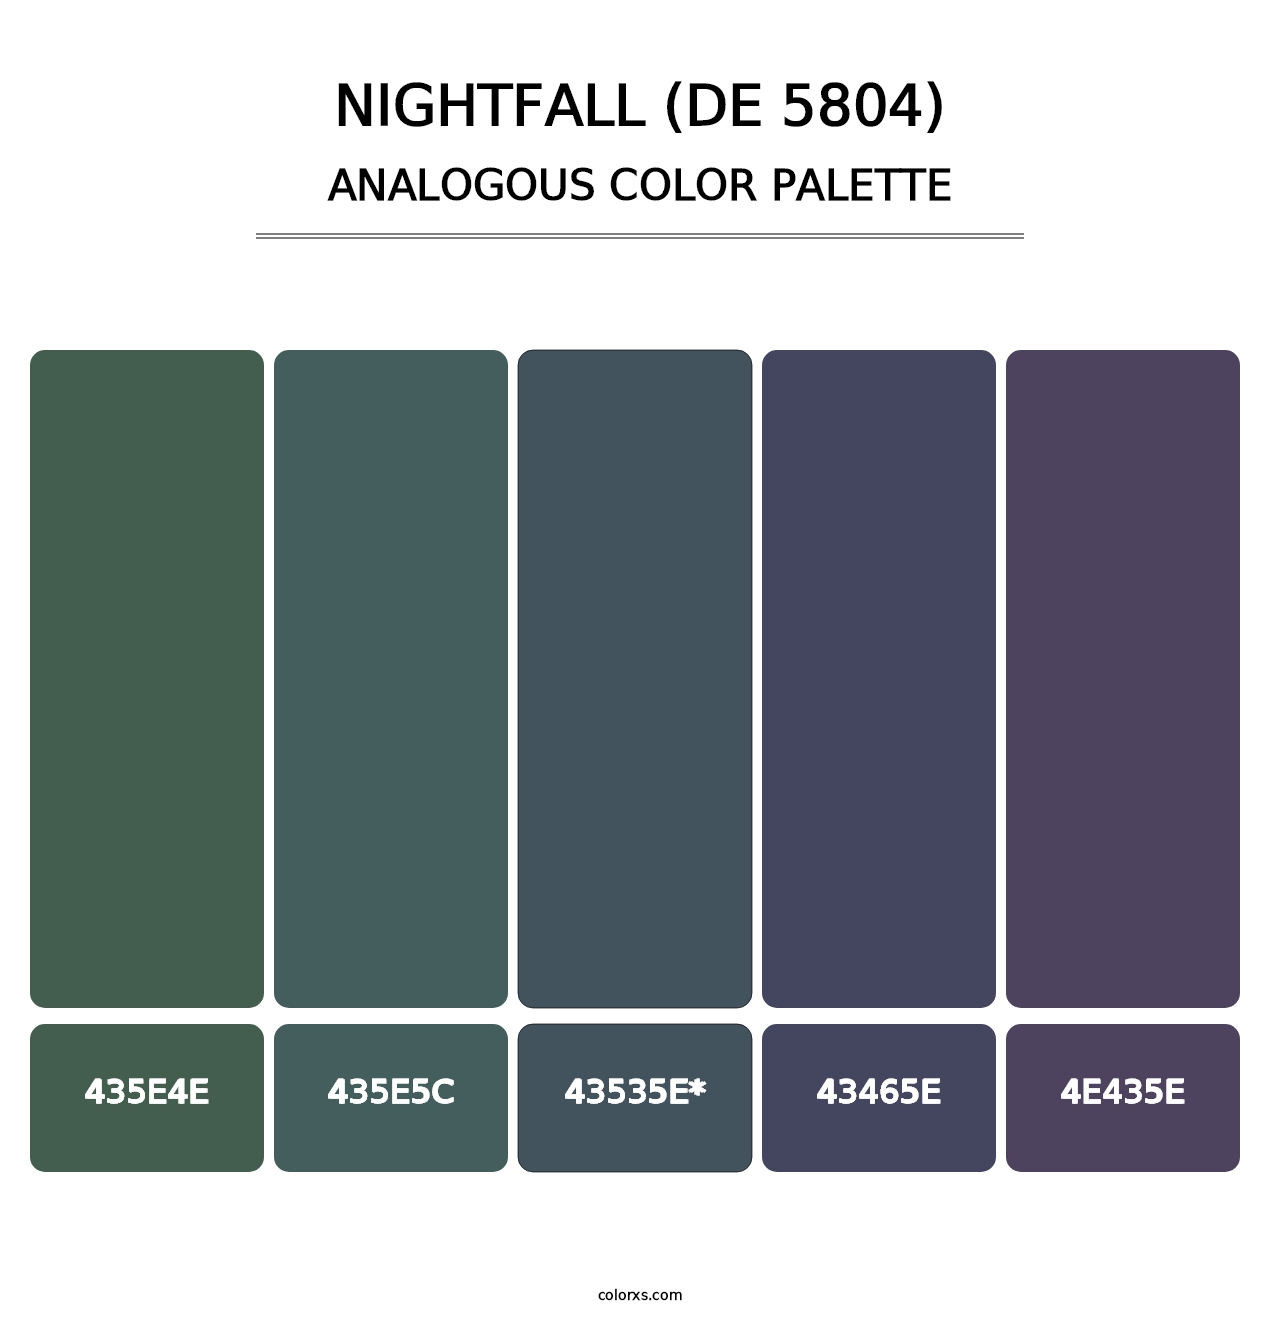 Nightfall (DE 5804) - Analogous Color Palette